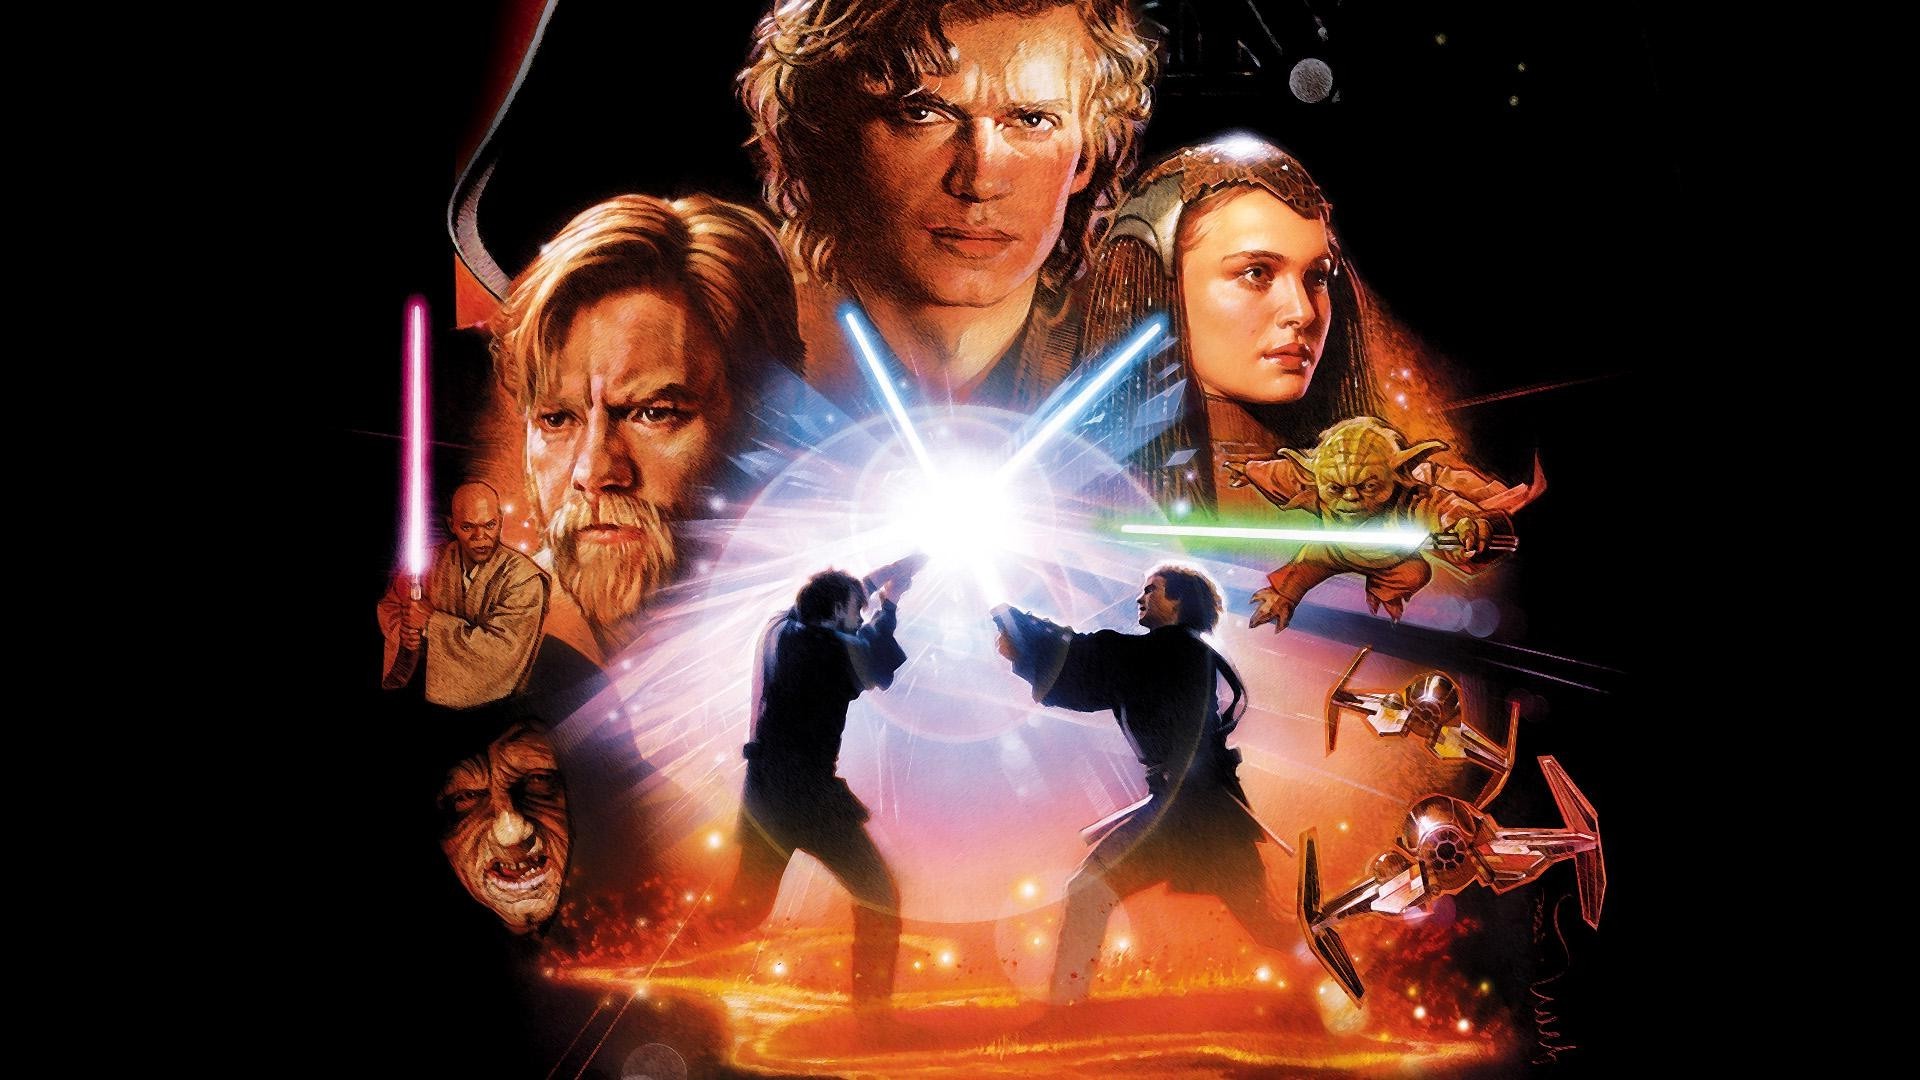 Movies Star Wars Star Wars Episode Iii The Revenge Of The Sith Anakin Skywalker Padme Amidala Obi Wan Kenobi Wallpapers Hd Desktop And Mobile Backgrounds